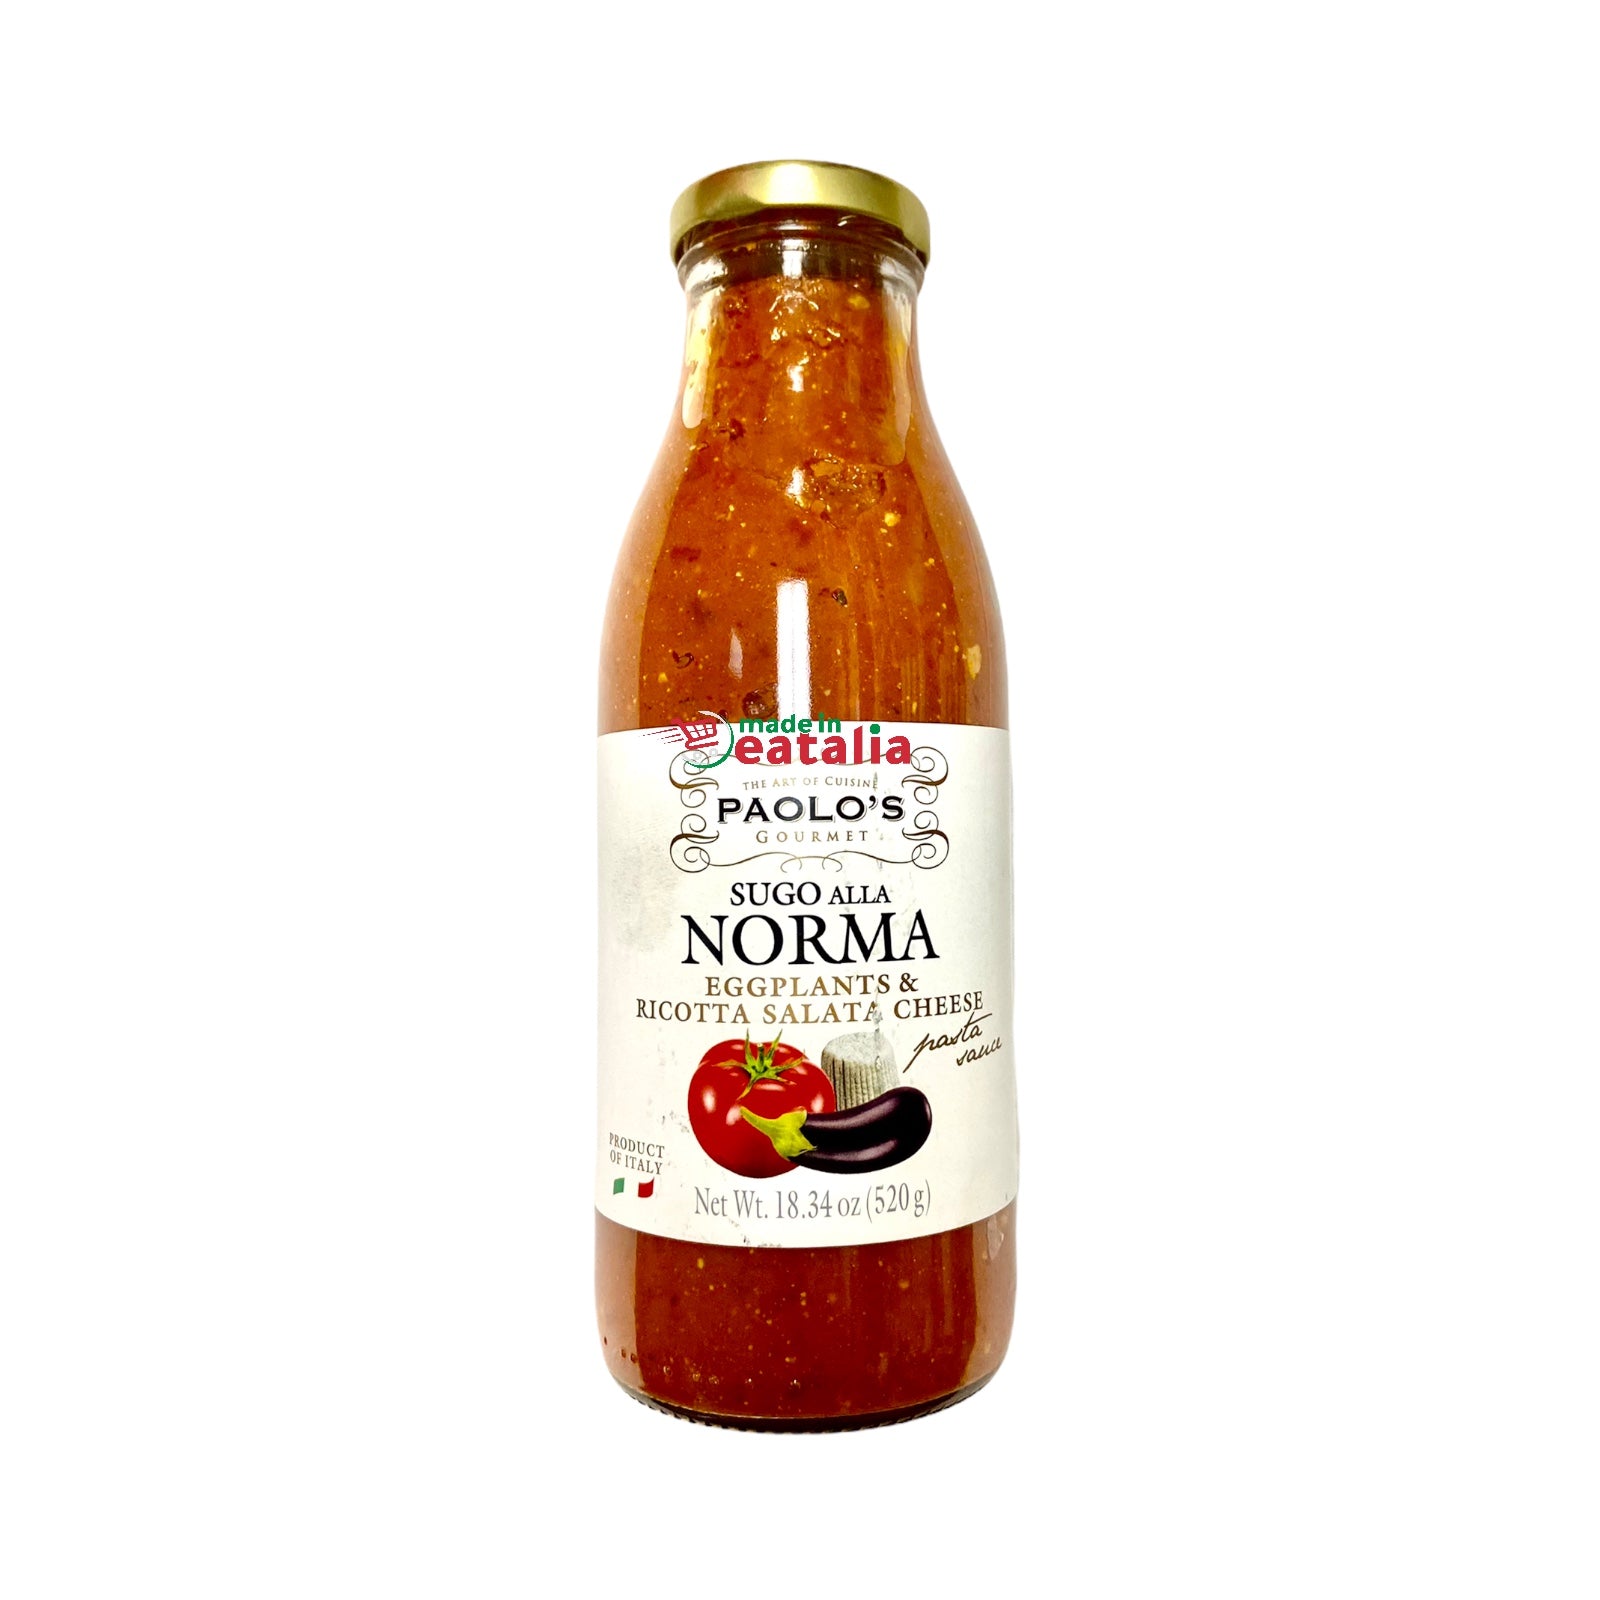 Norma Tomato Sauce With Eggplant And Ricotta Salata